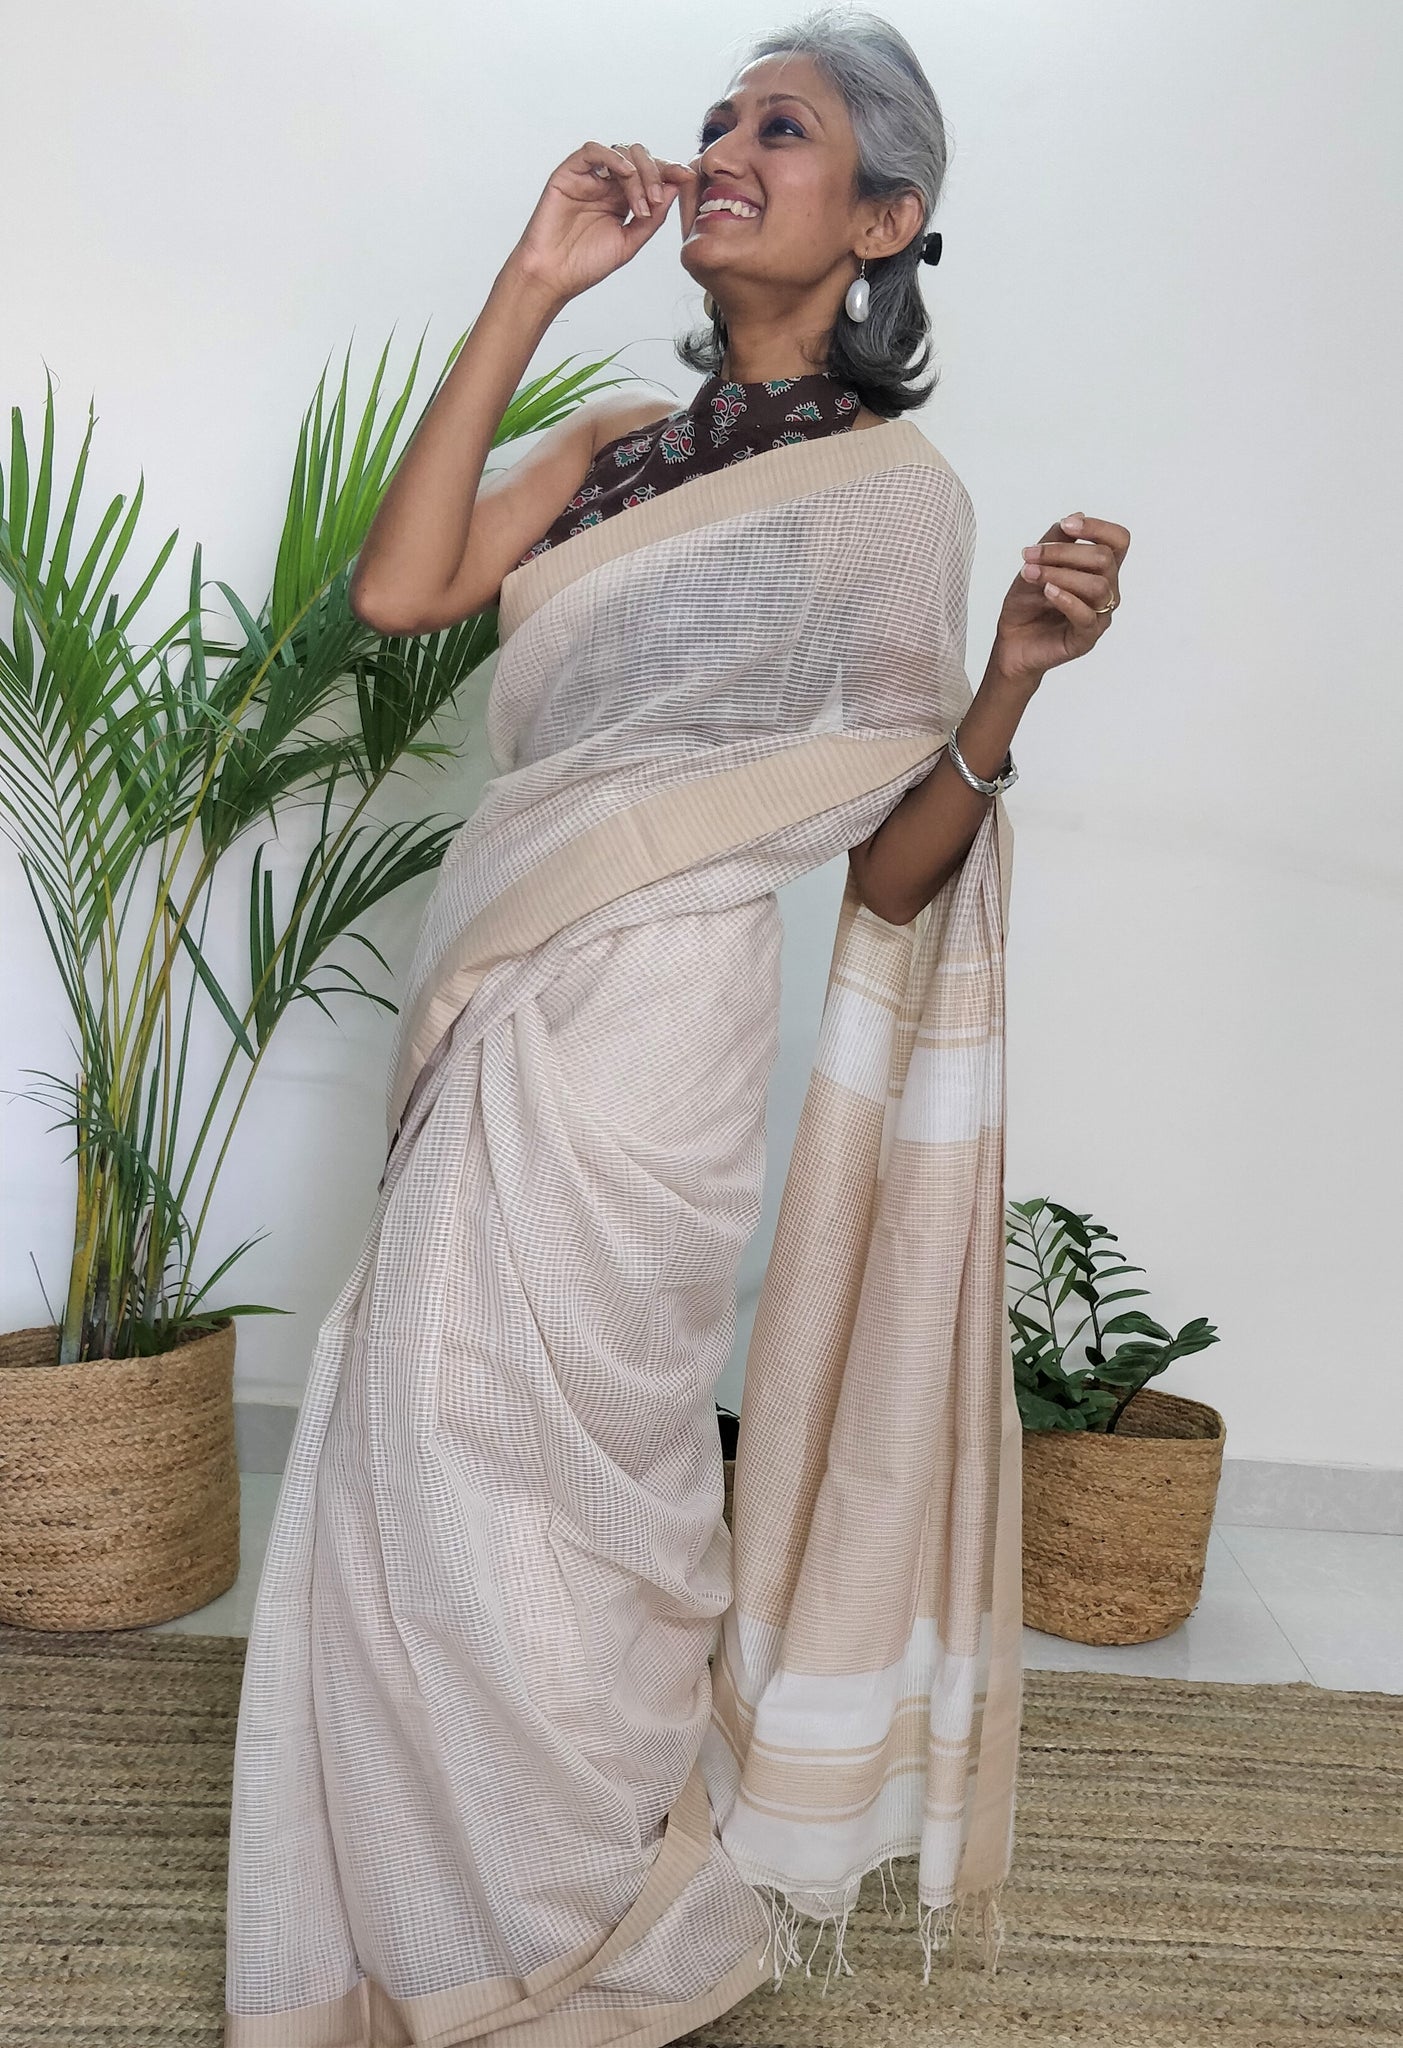 Cotton Sarees - Buy Handloom Cotton Saree Online @ best price in India